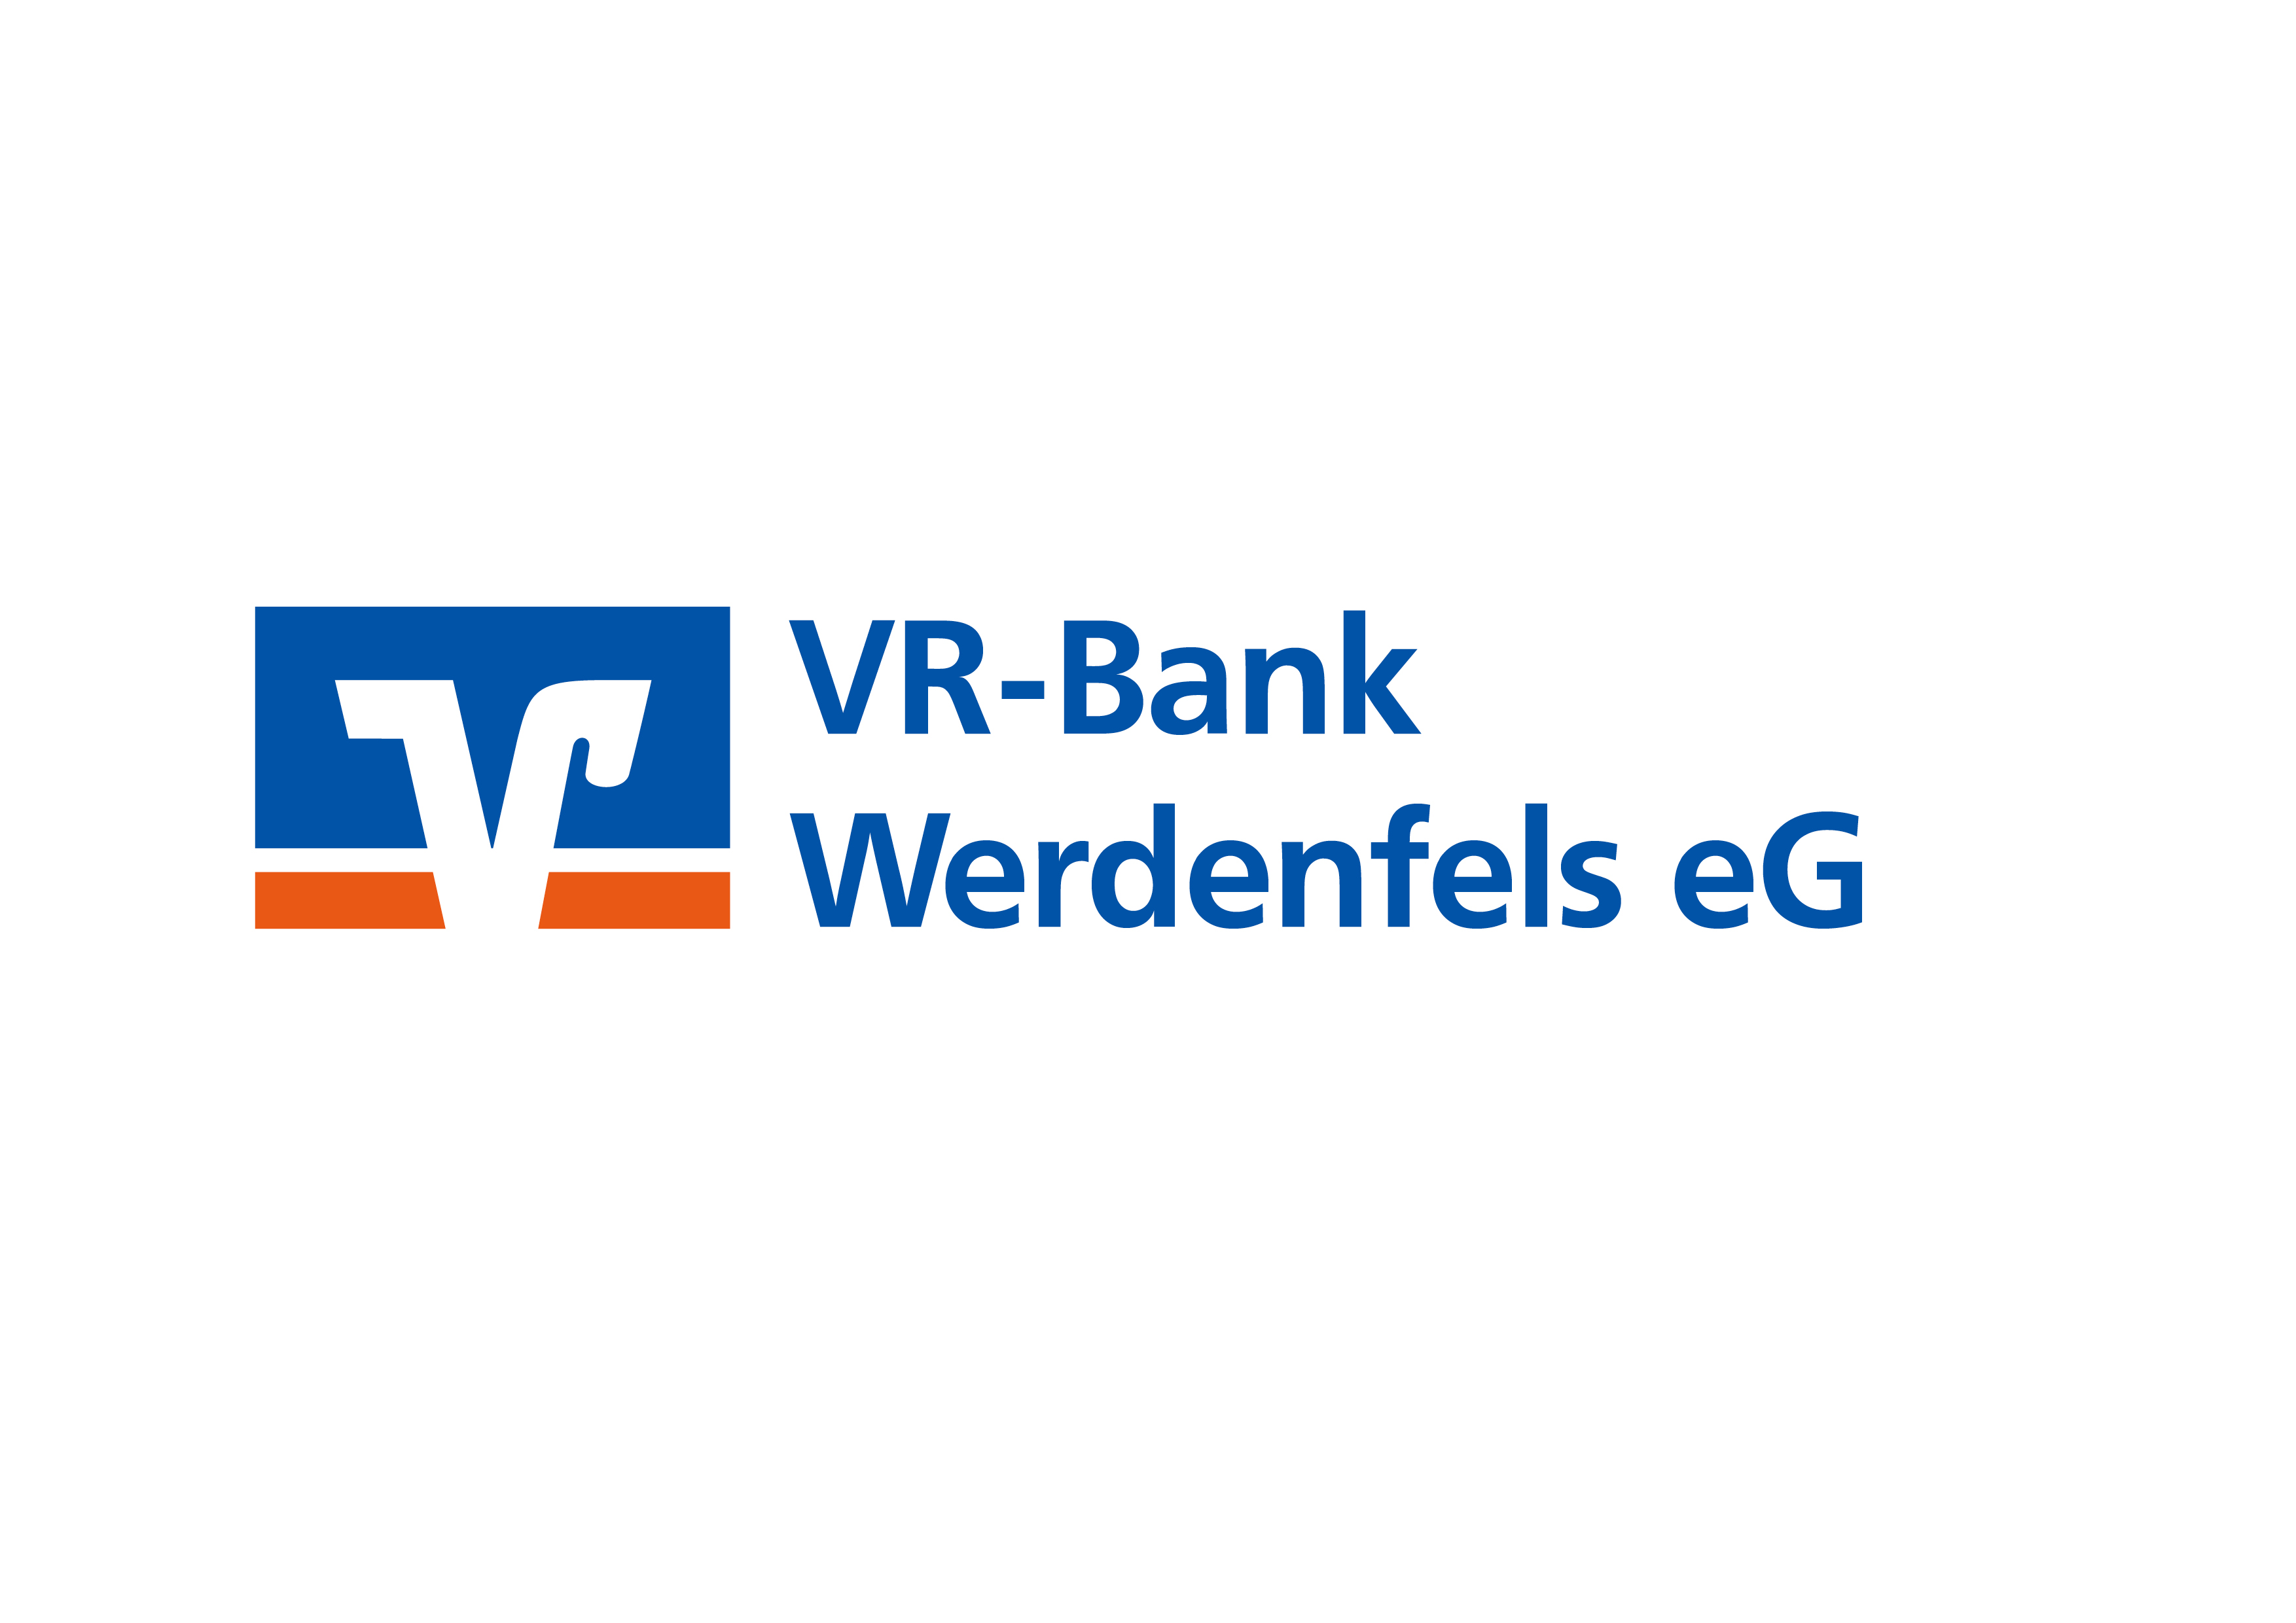 VR-Bank Werdenfels